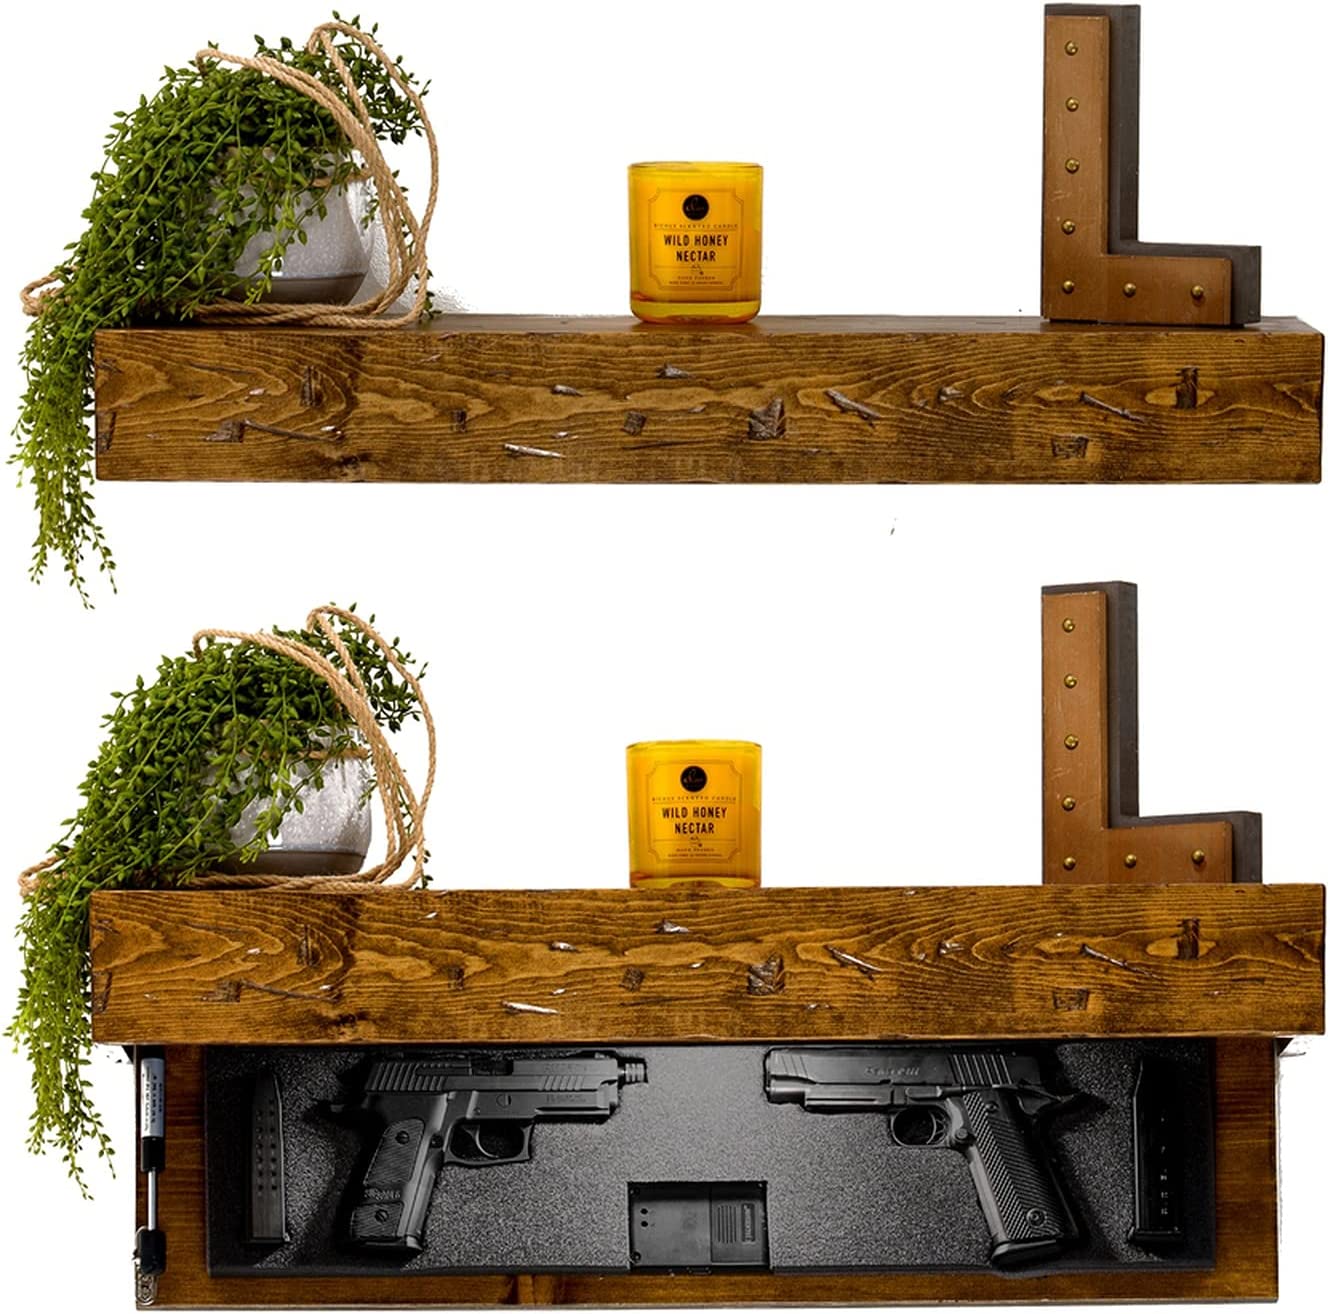 Tactical Traps Liberty 35s Gun Shelf with Trap Door | Handgun Storage with RFID Lock | Secure & Safe Hidden Gun Compartment | 30” x 8” x 3 ¾” Country Pine